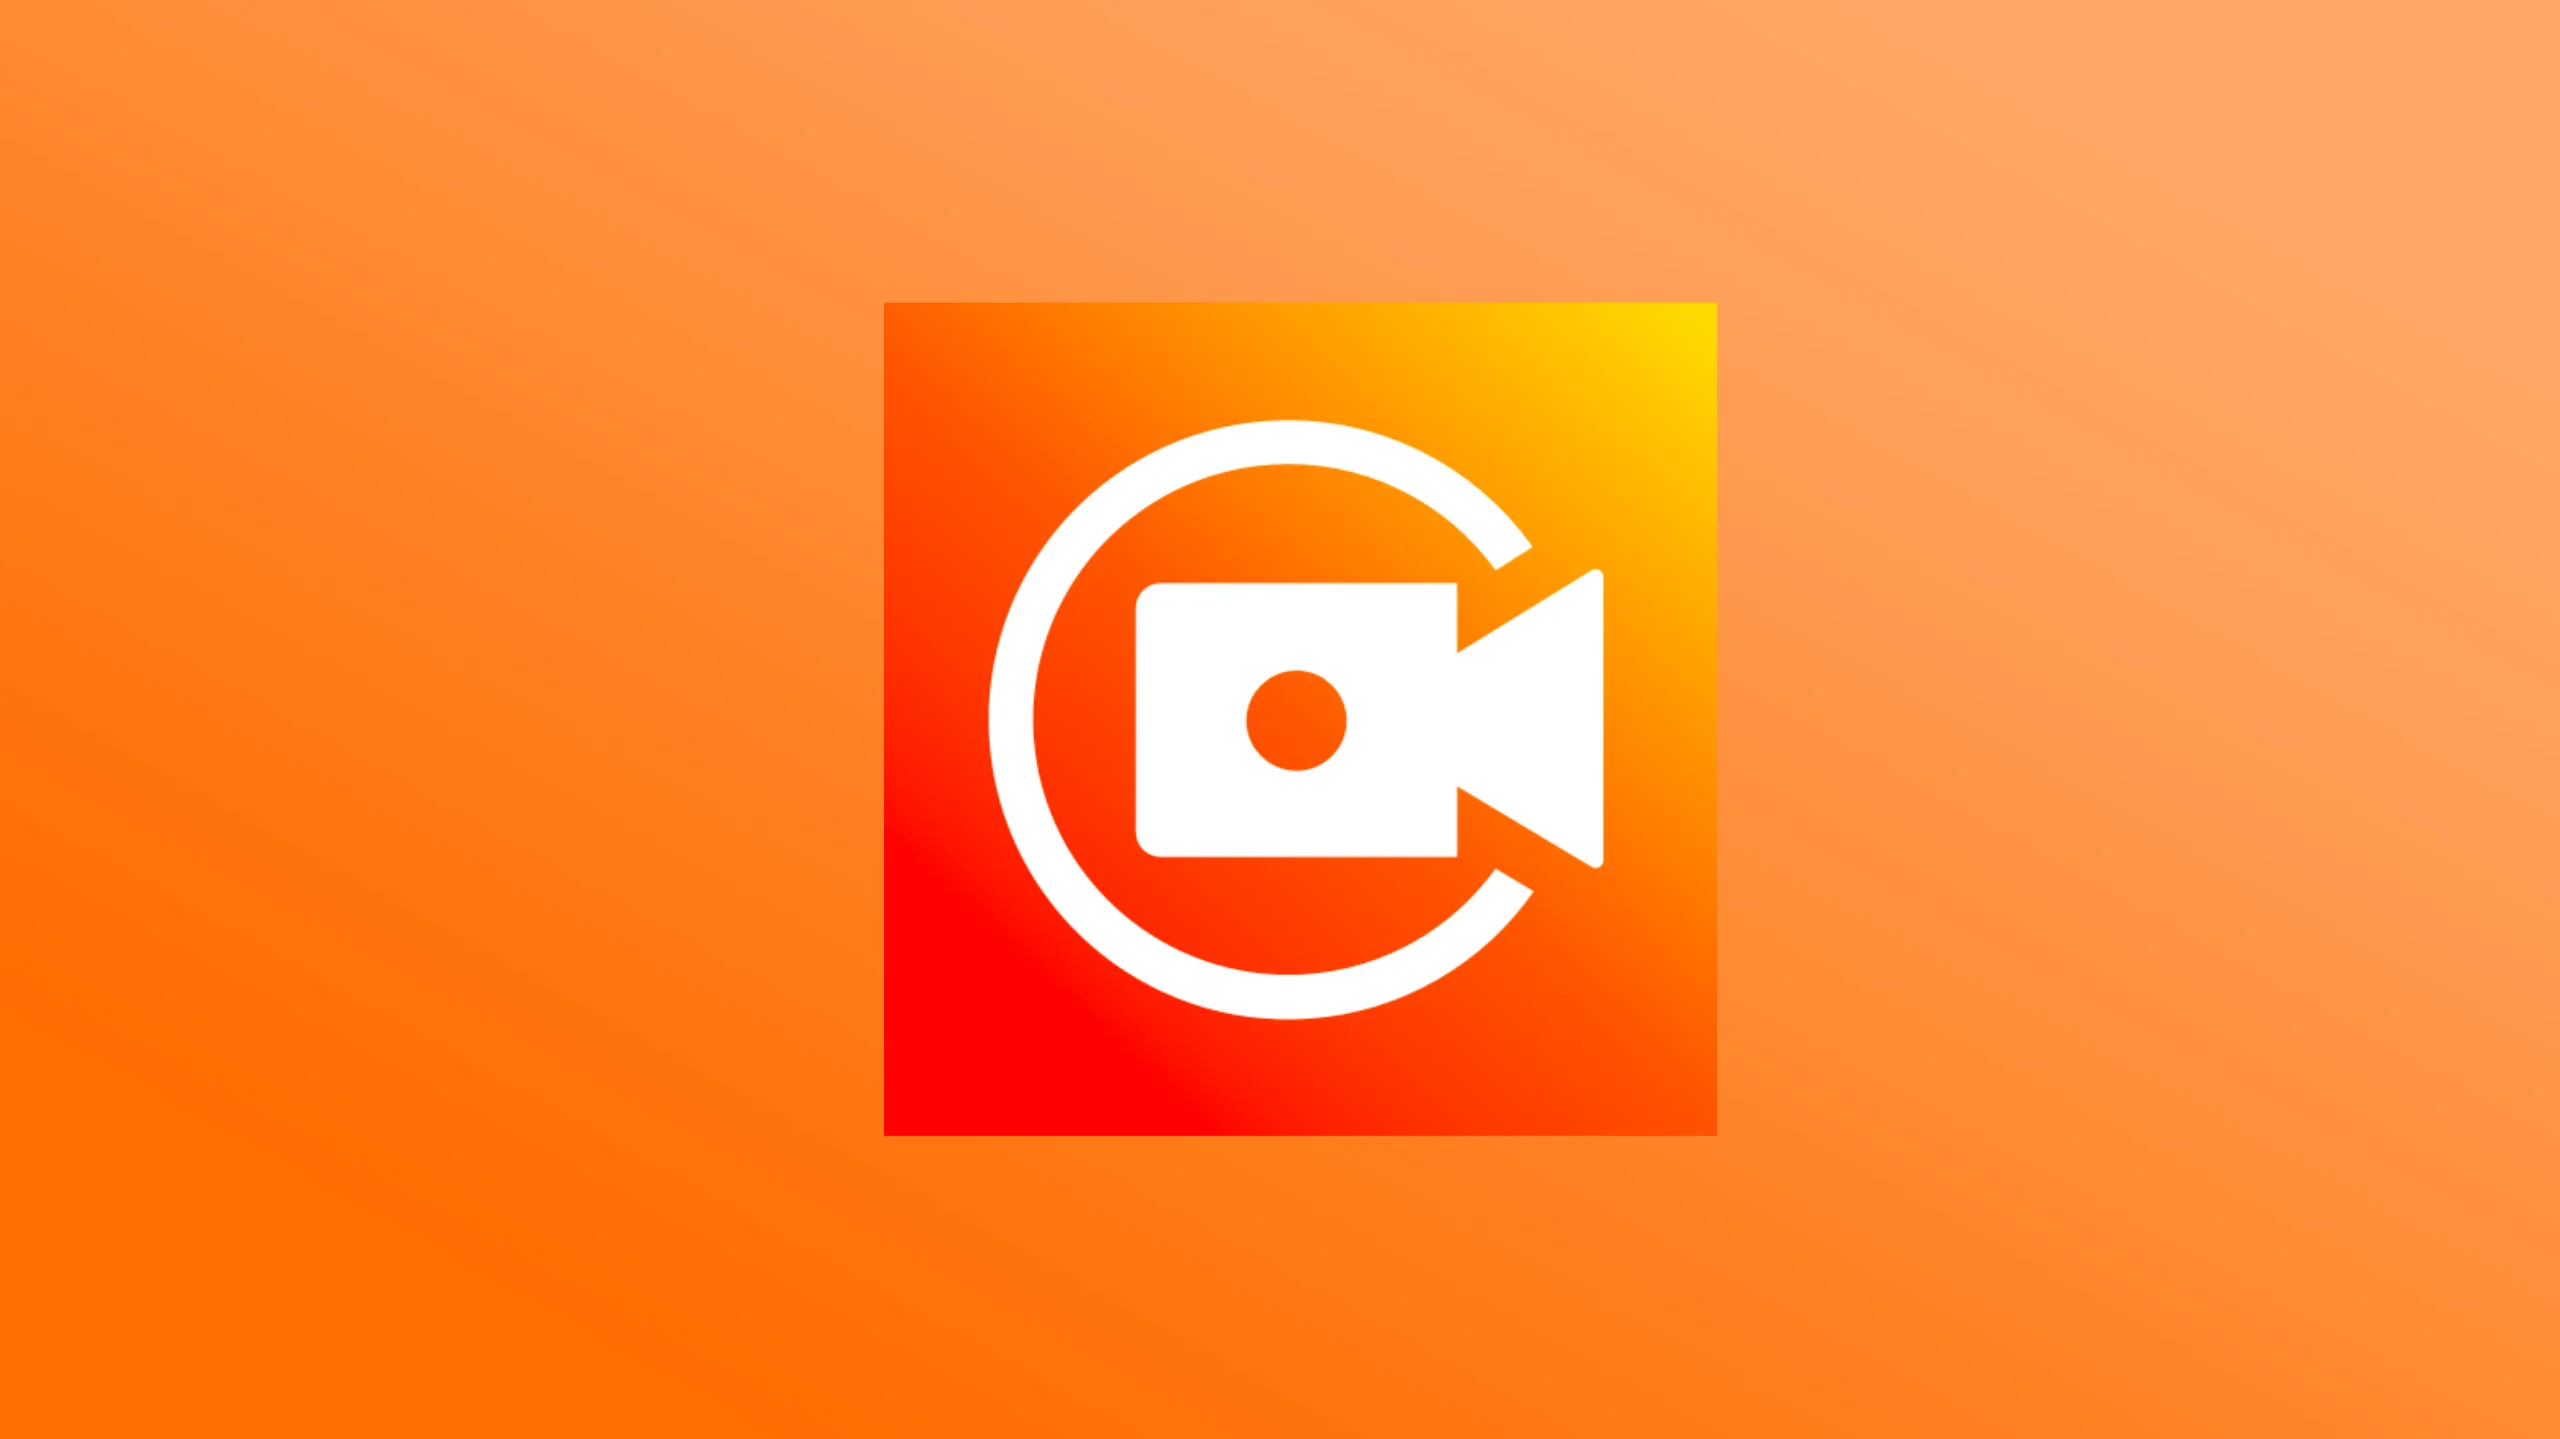 plain orange background hd orange 1 - Download Xrecorder Mod Apk V2.3.5.4 (Premium Unlocked)